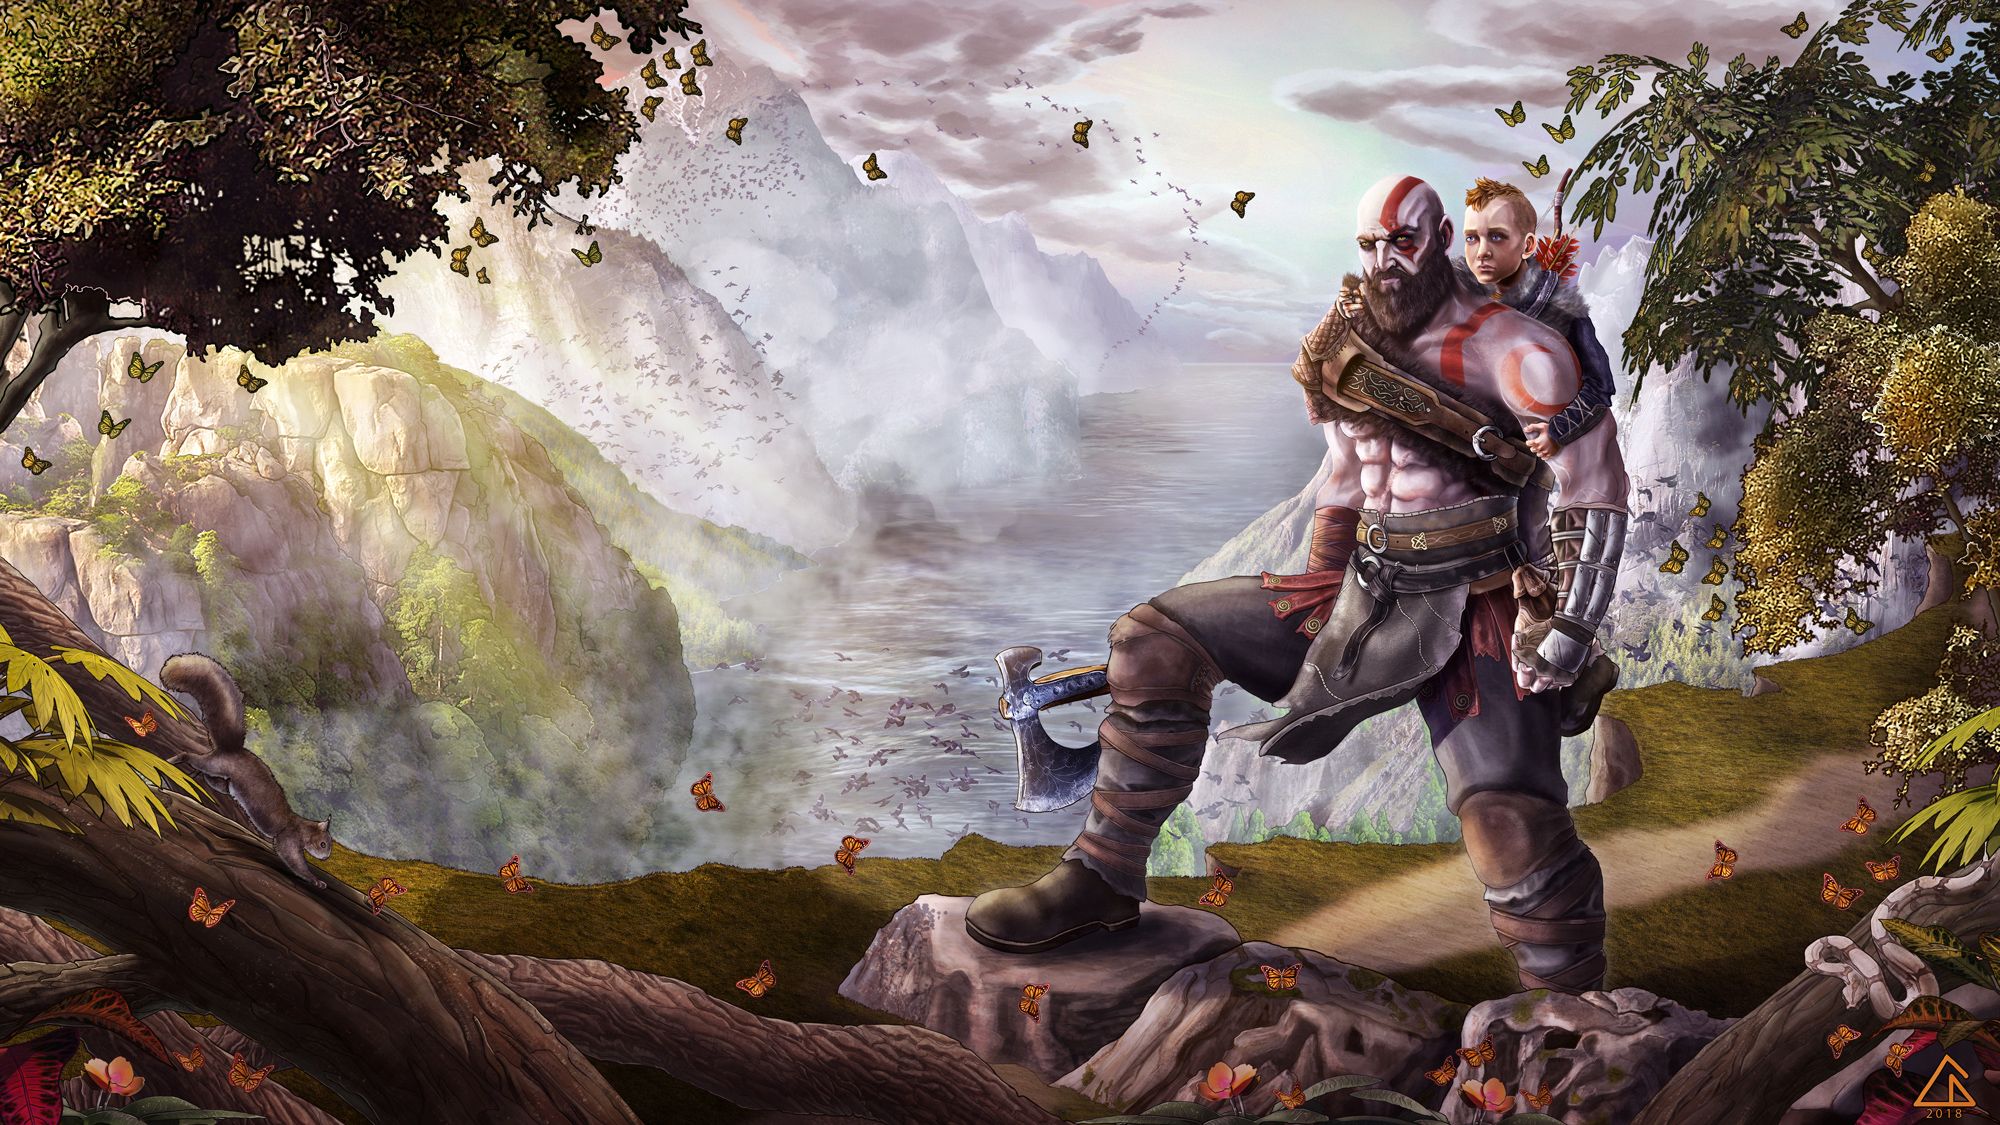 God Of War Atreus Kratos Fan Art, HD Games, 4k Wallpapers, Image, Backgroun...